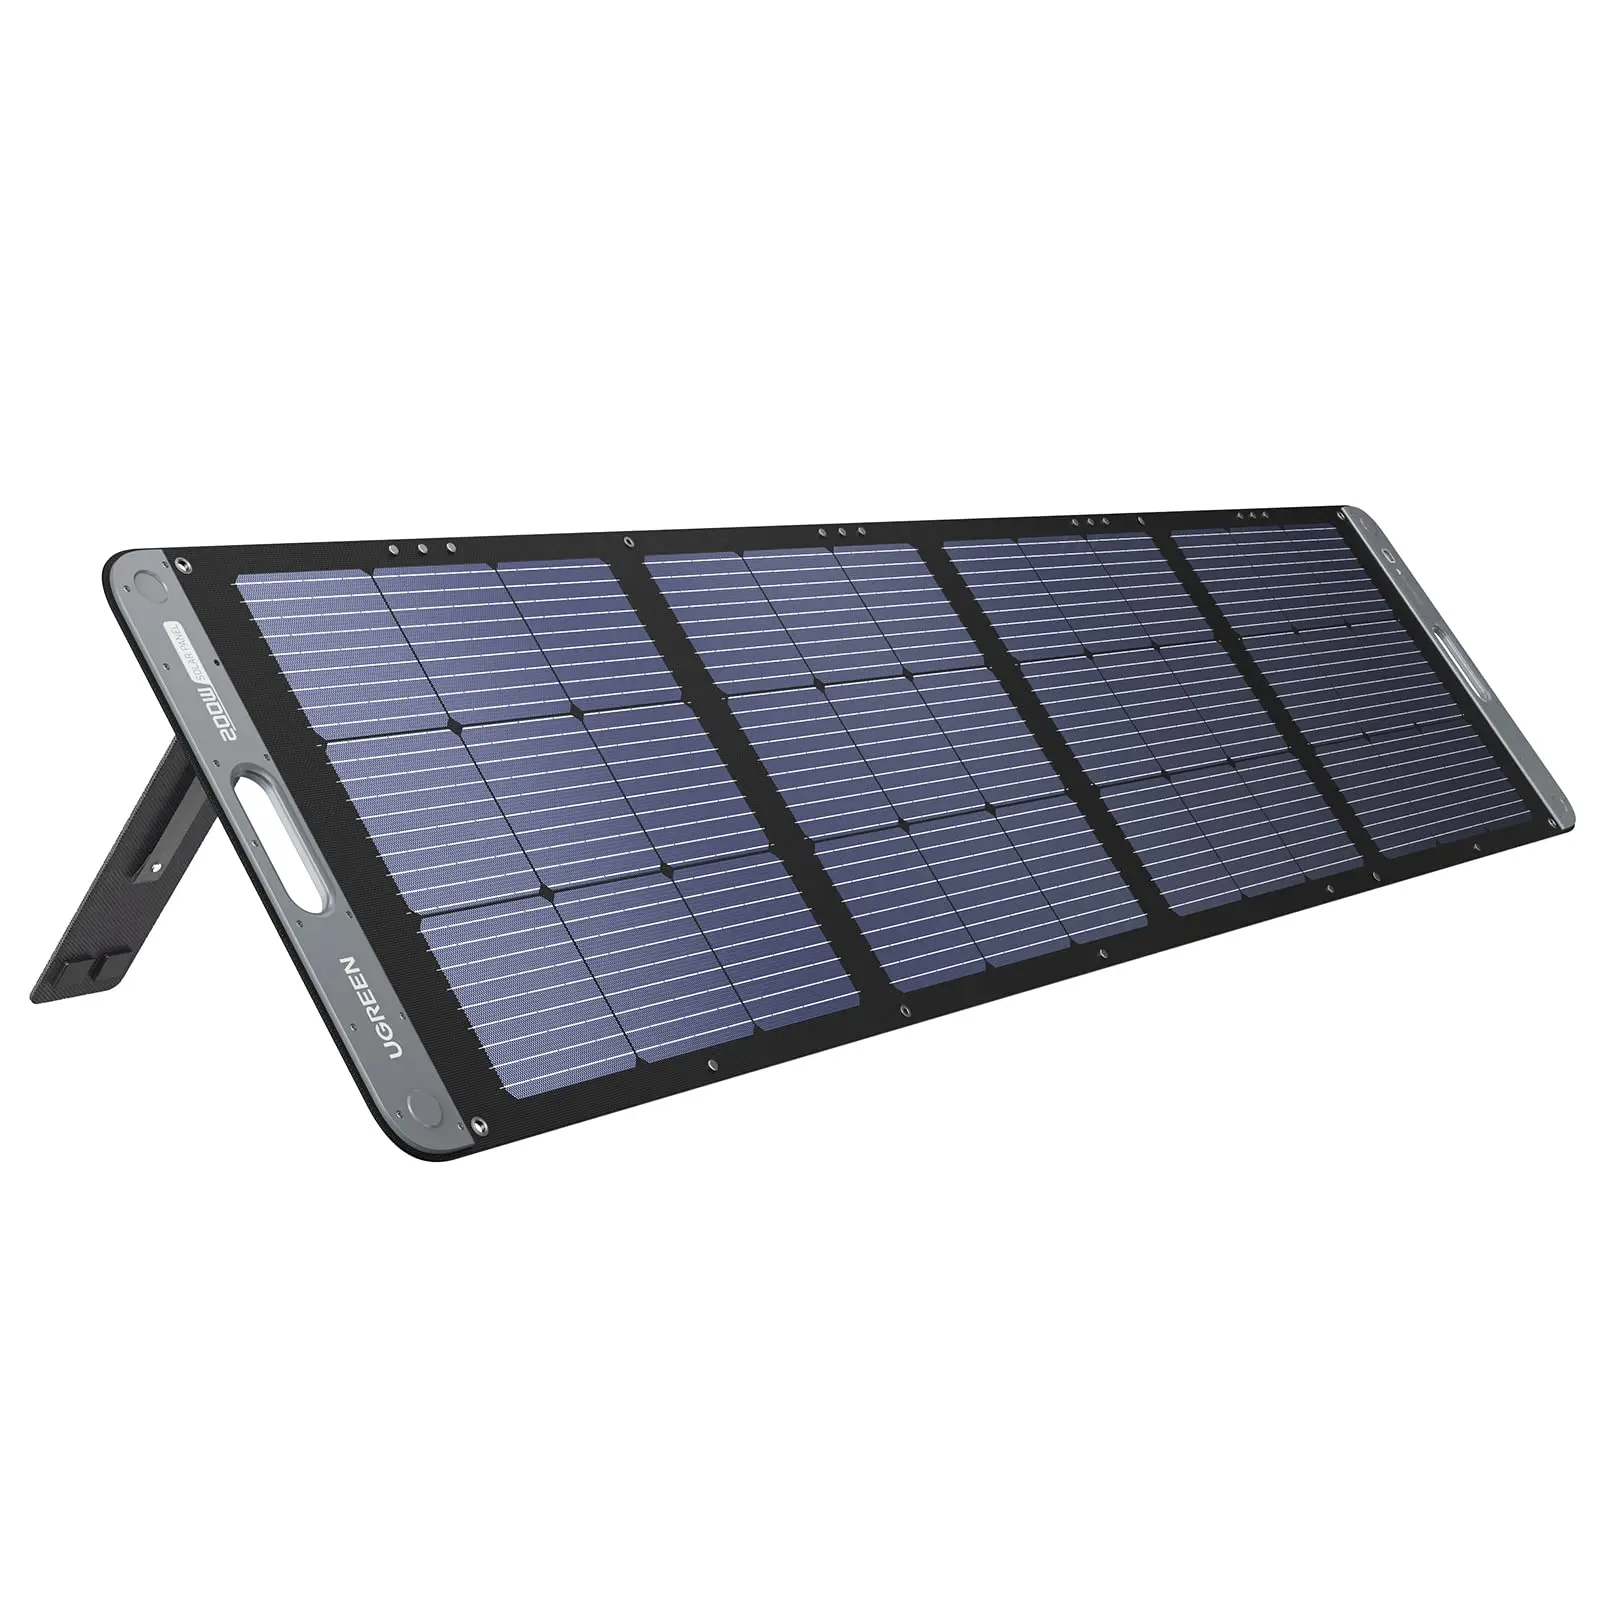 200 watt portable solar panels - What can you run off a 200W solar panel